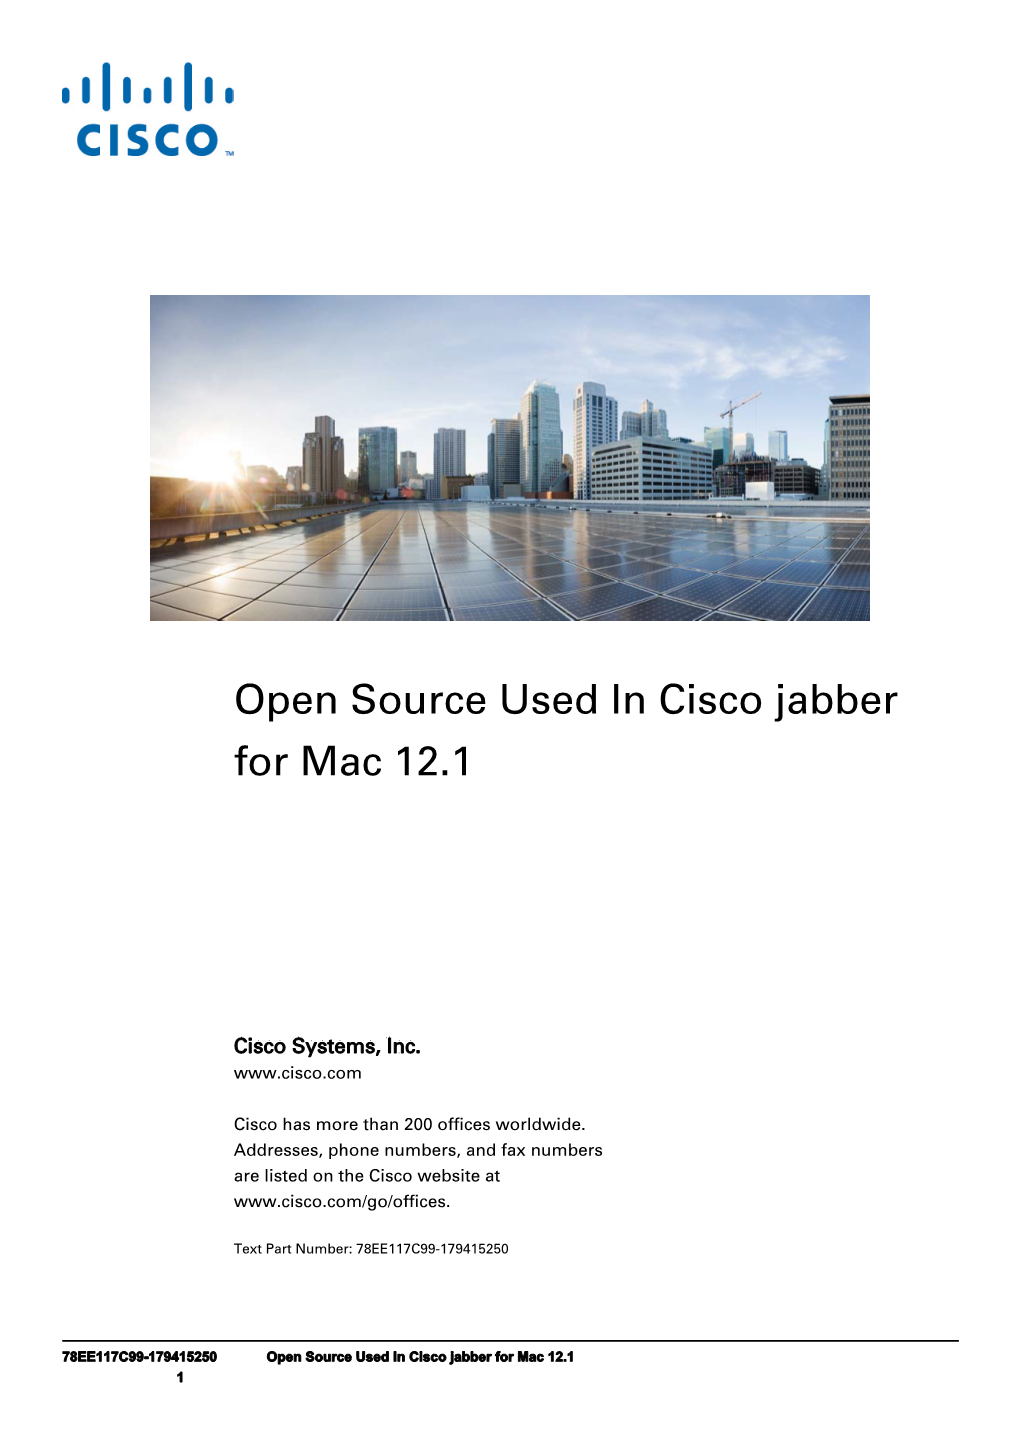 Licensing Information for Cisco Jabber for Mac 12.1